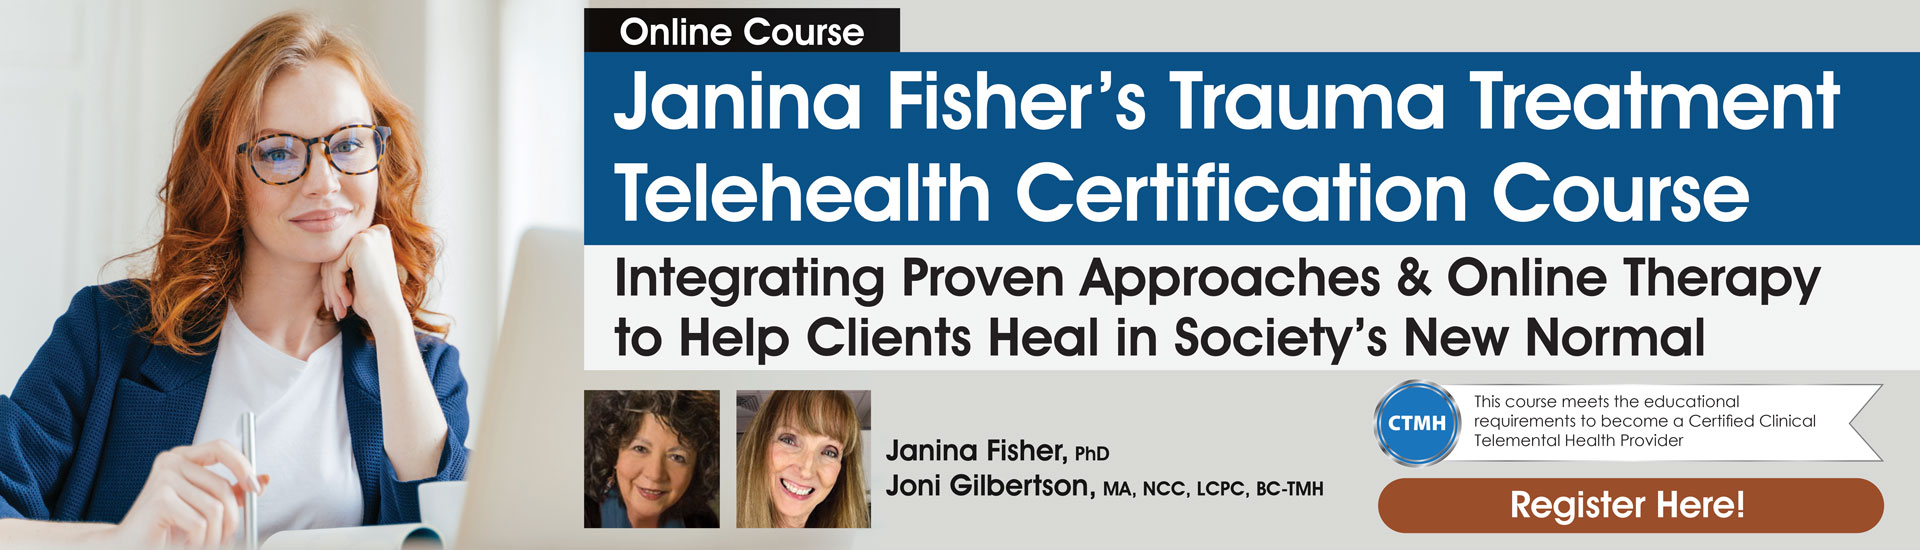 Janina Fisher’s Trauma Treatment Telehealth Certification Course